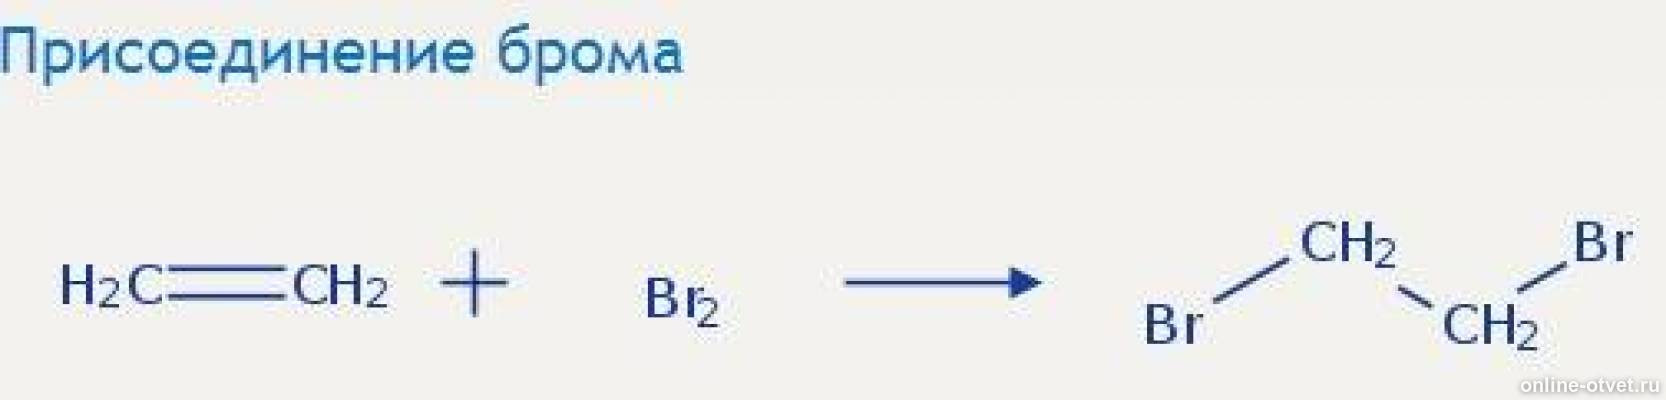 Ch x 0. Присоединение брома. Этанол+CL. Реакция присоединения брома. Этен и вода реакция.